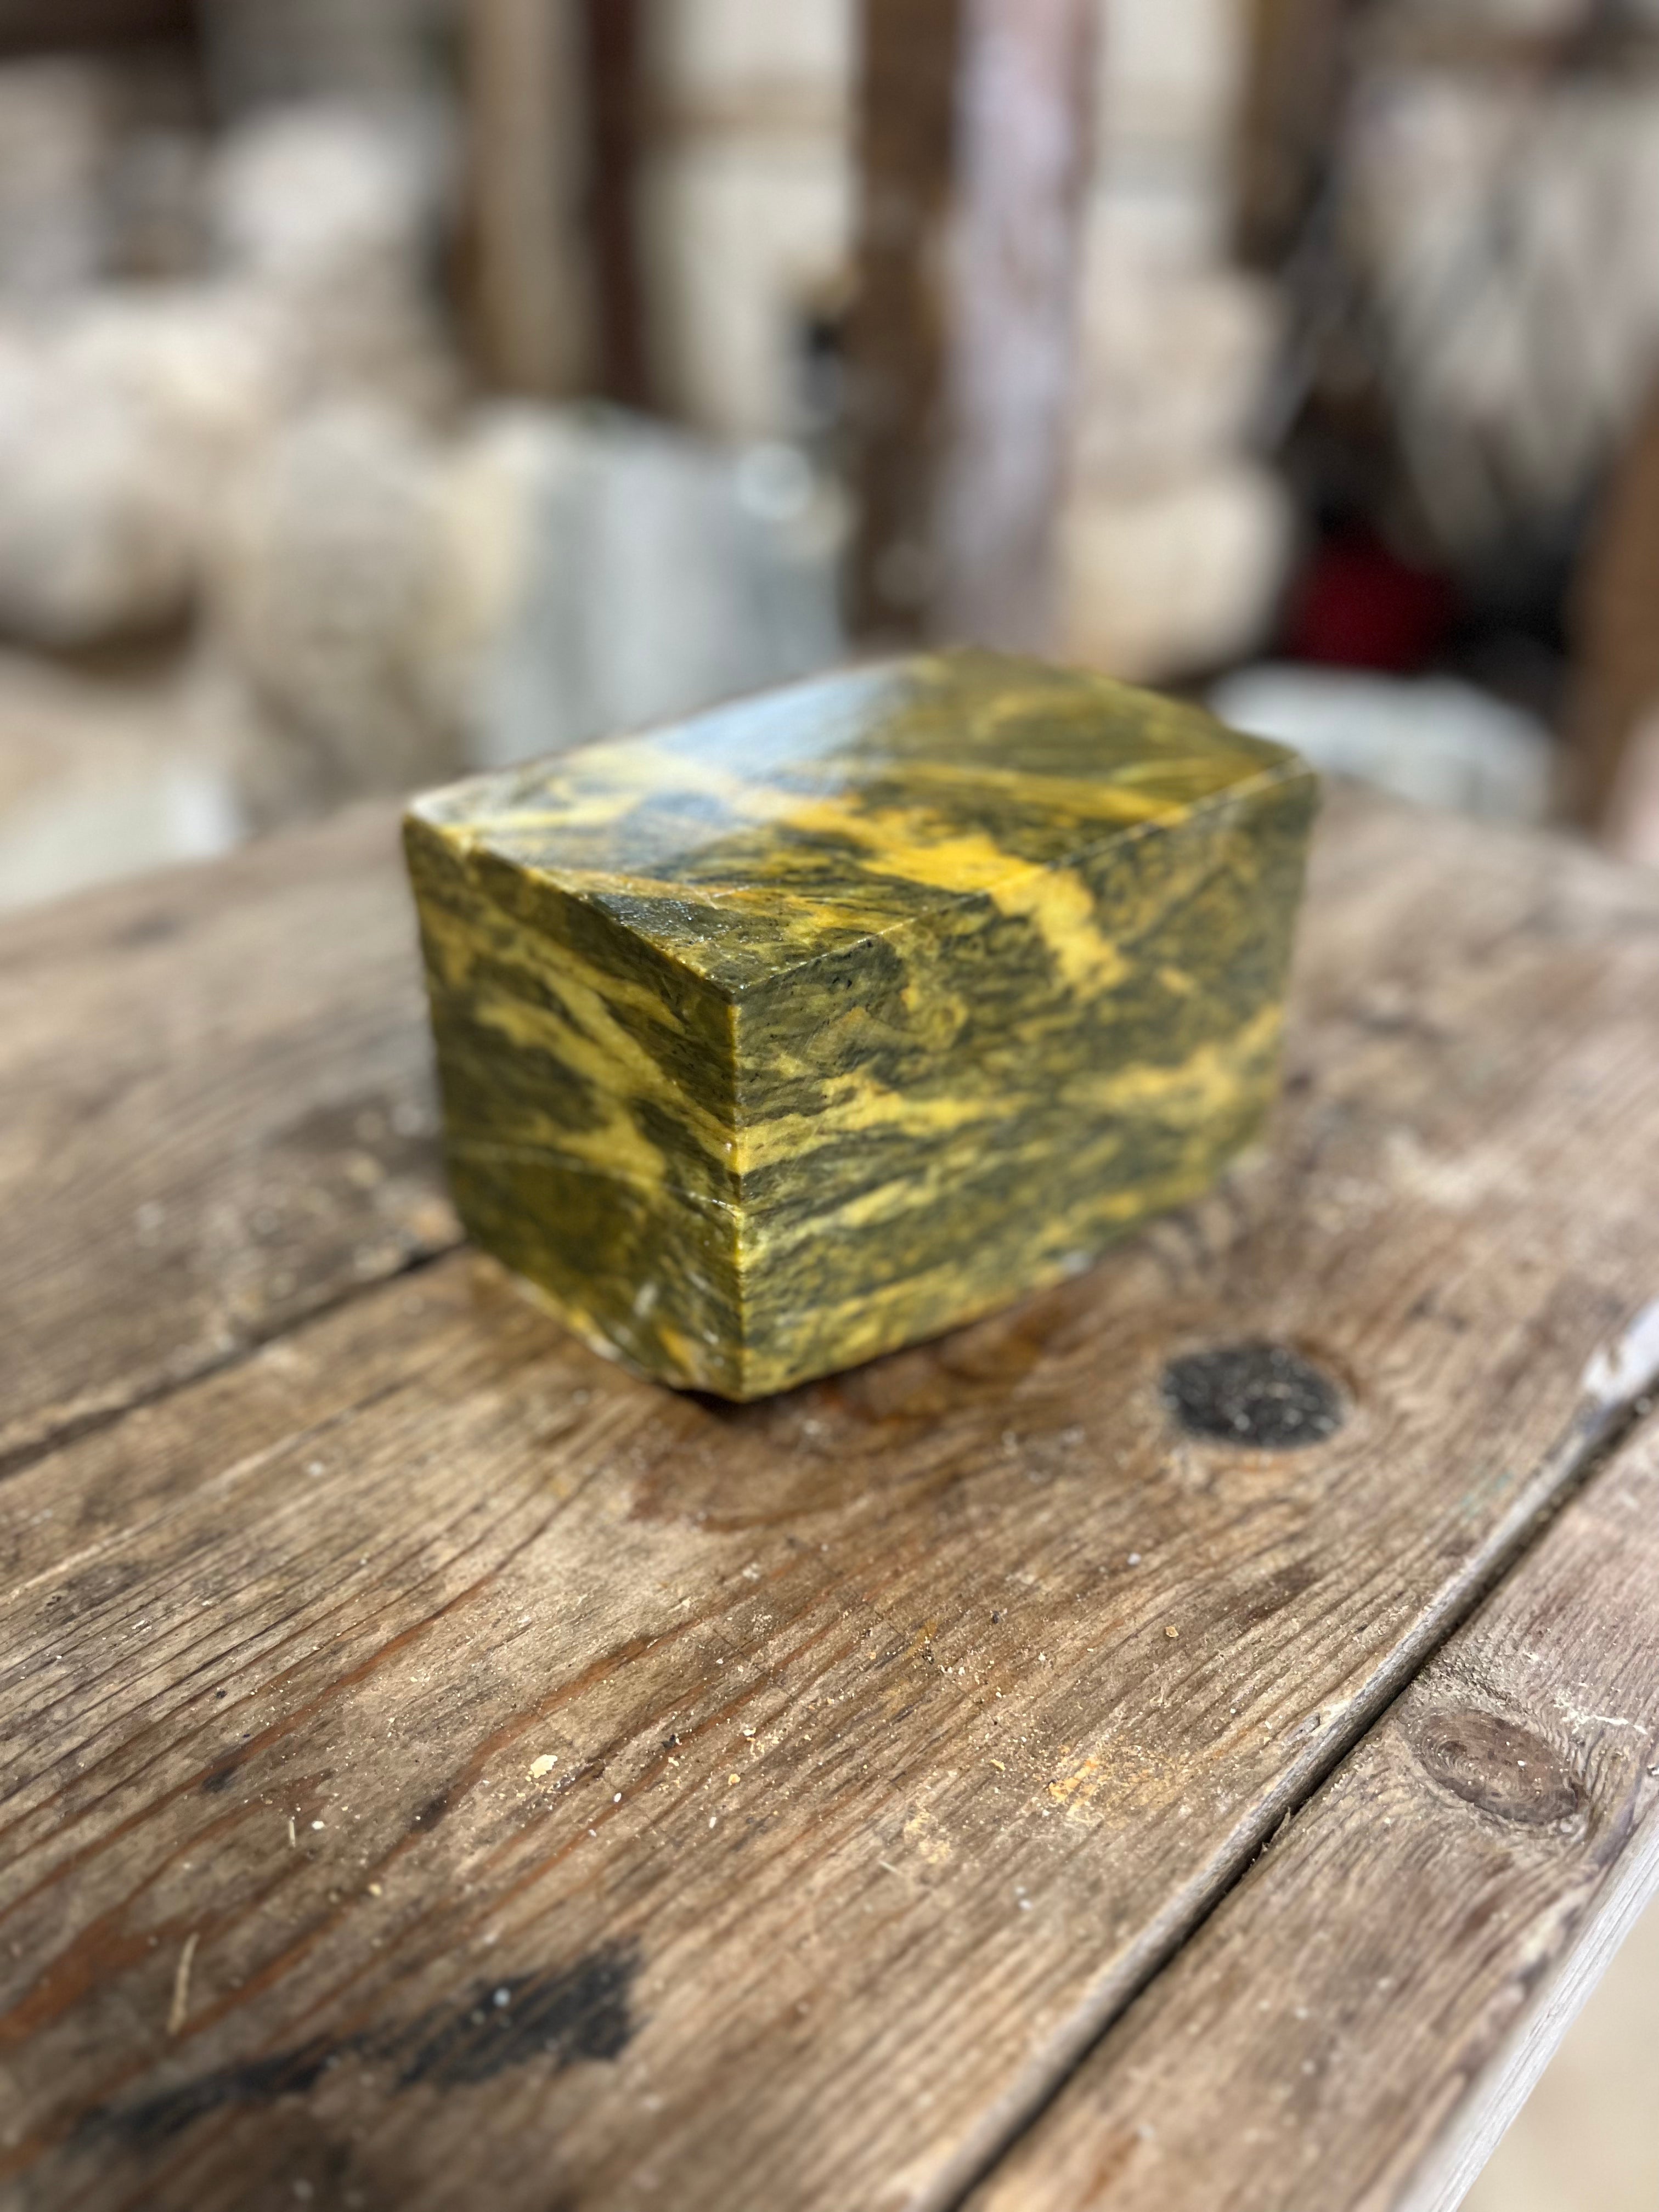 Indian Gray/Green Soapstone 16lb Block 5x5x6